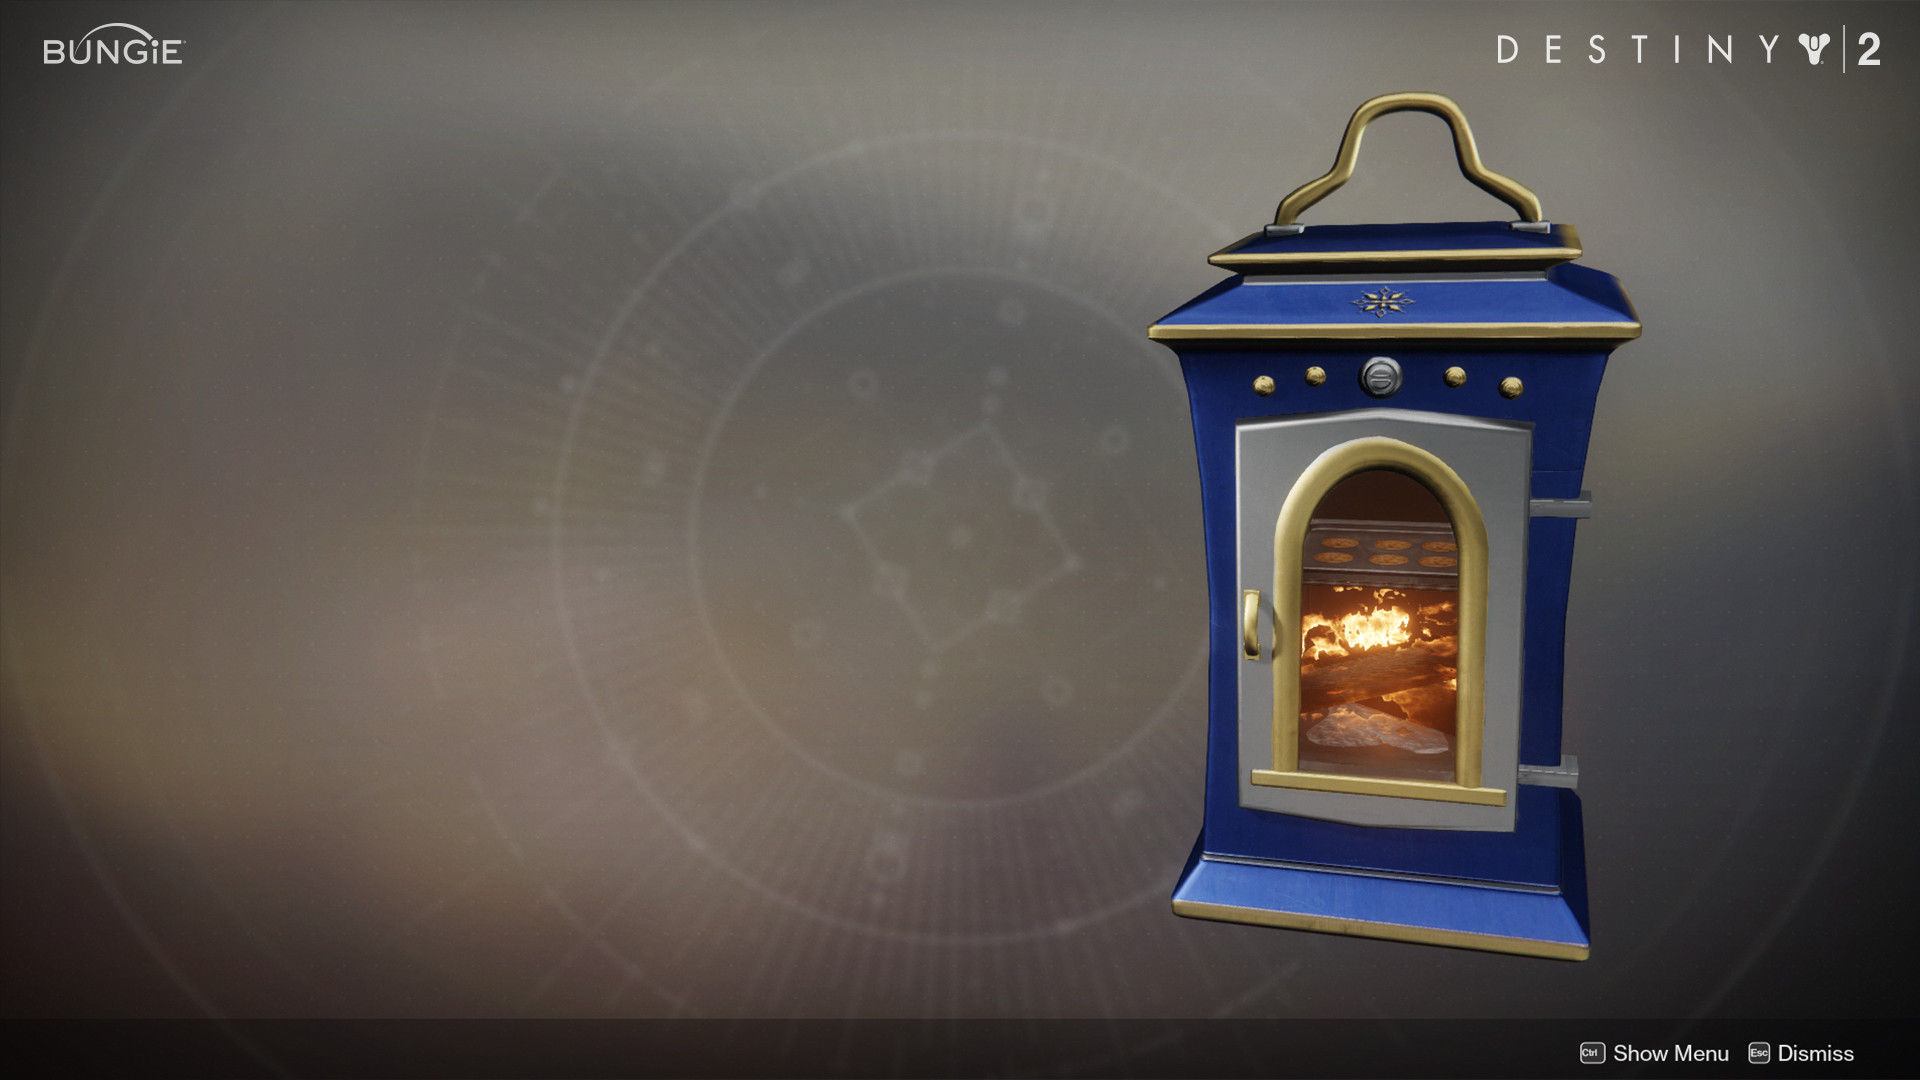 Eva's Holiday Oven - Destiny 2.